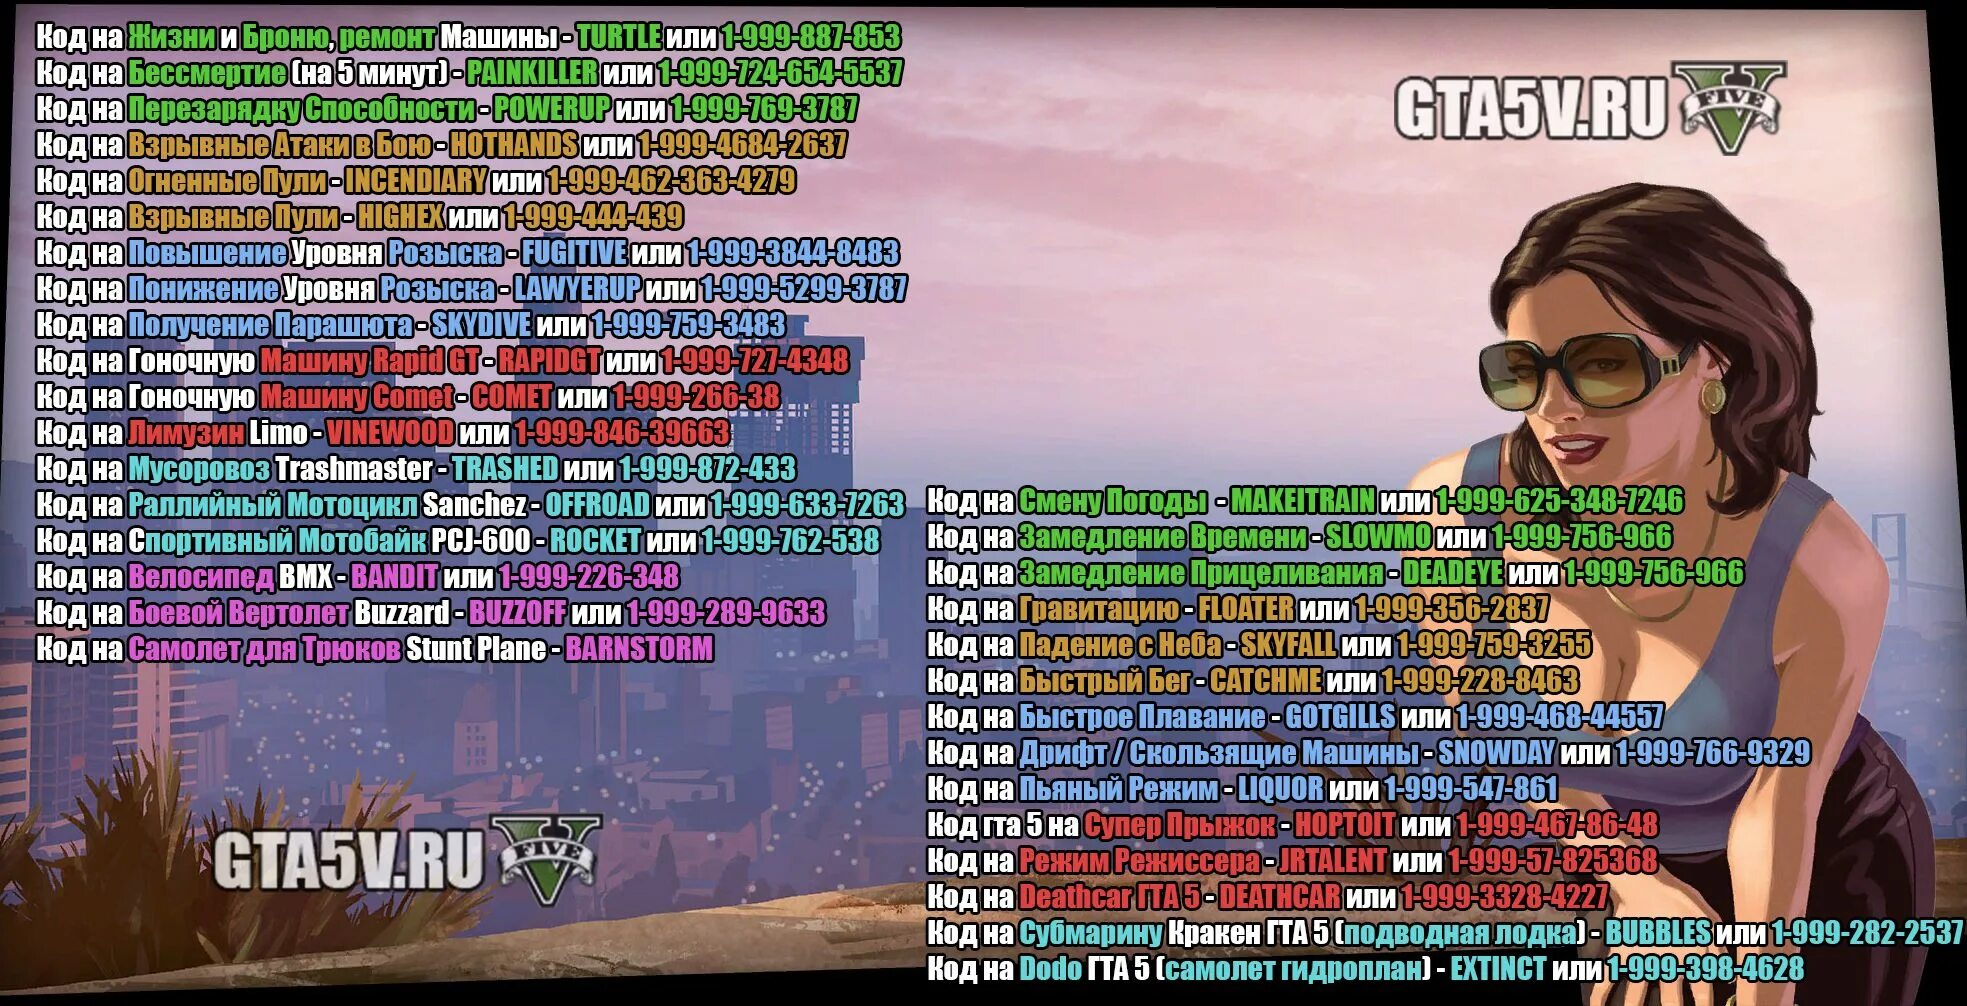 Читы на ГТА 5 чит коды на ГТА 5. GTA Grand Theft auto коды 5. Код GTA V код для GTA V. GTA 5 Чита.